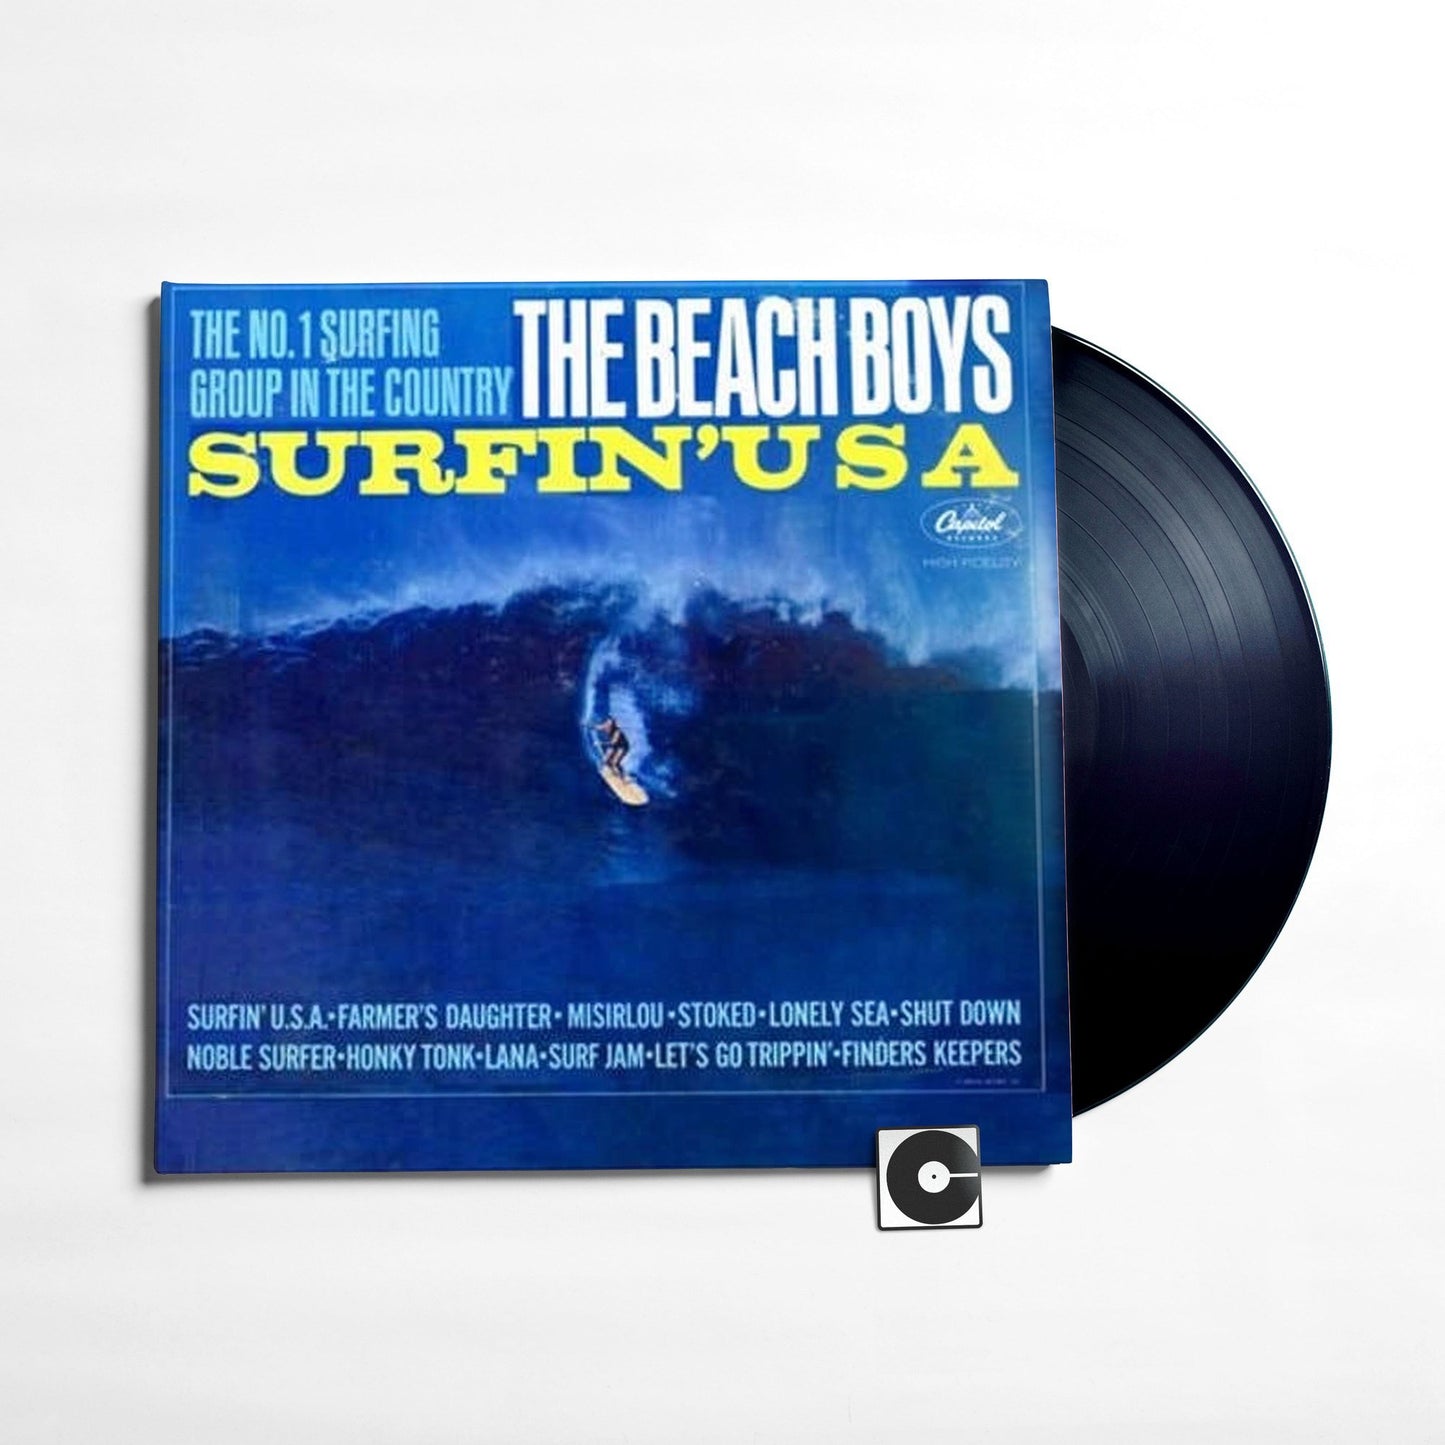 The Beach Boys - "Surfin' USA" Mono Analogue Productions